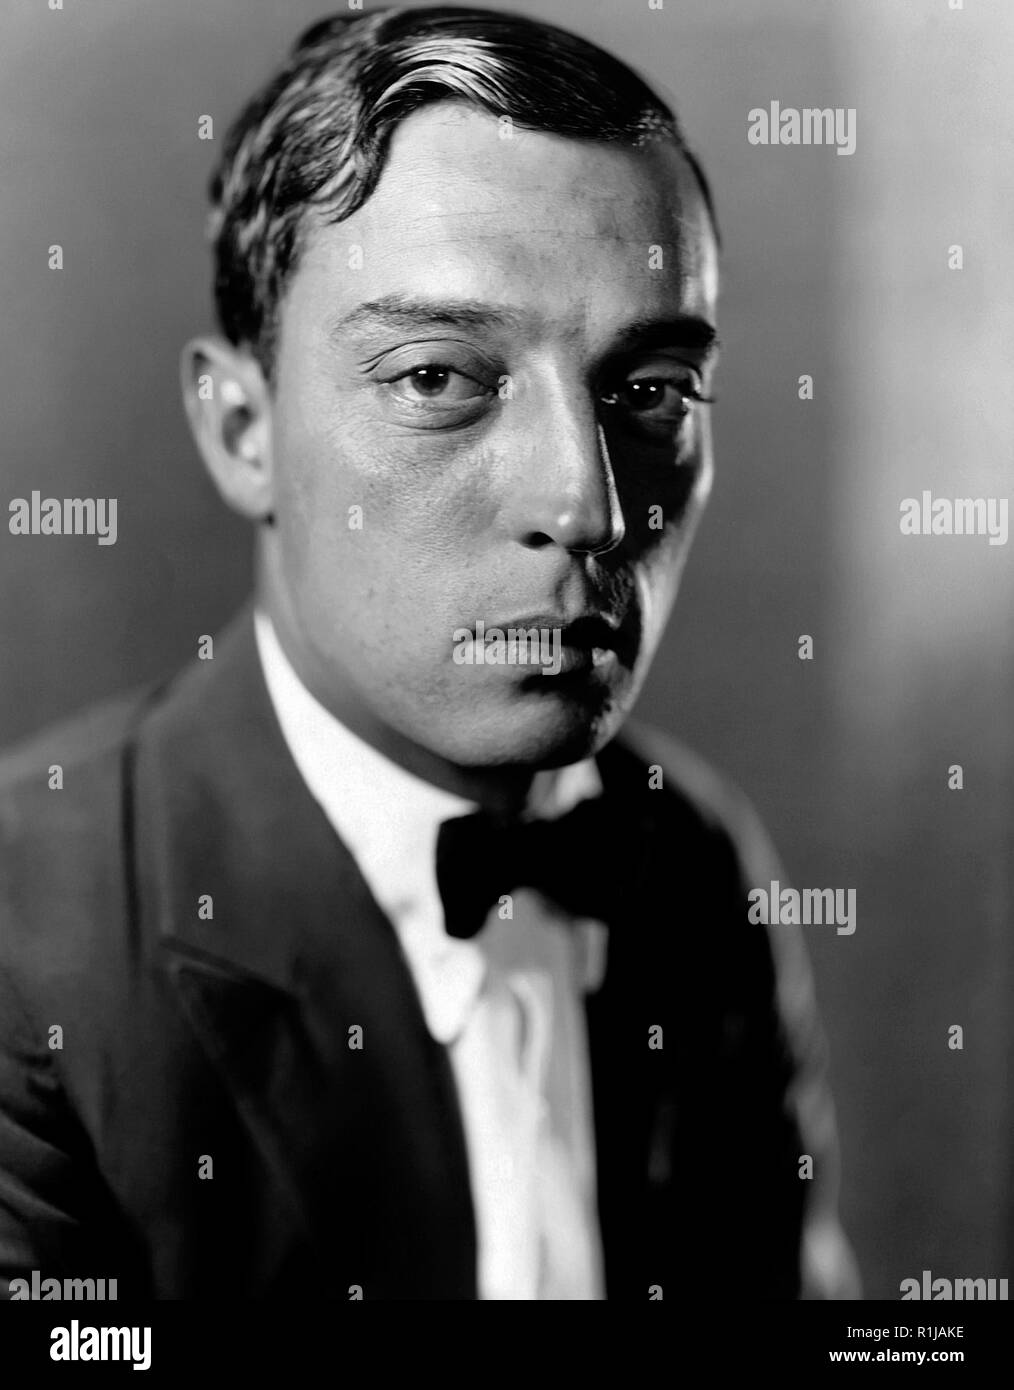 Circa 1925: American Film Schauspieler Buster Keaton (1895 - 1966). Quelle: Hollywood Foto Archiv/MediaPunch Stockfoto